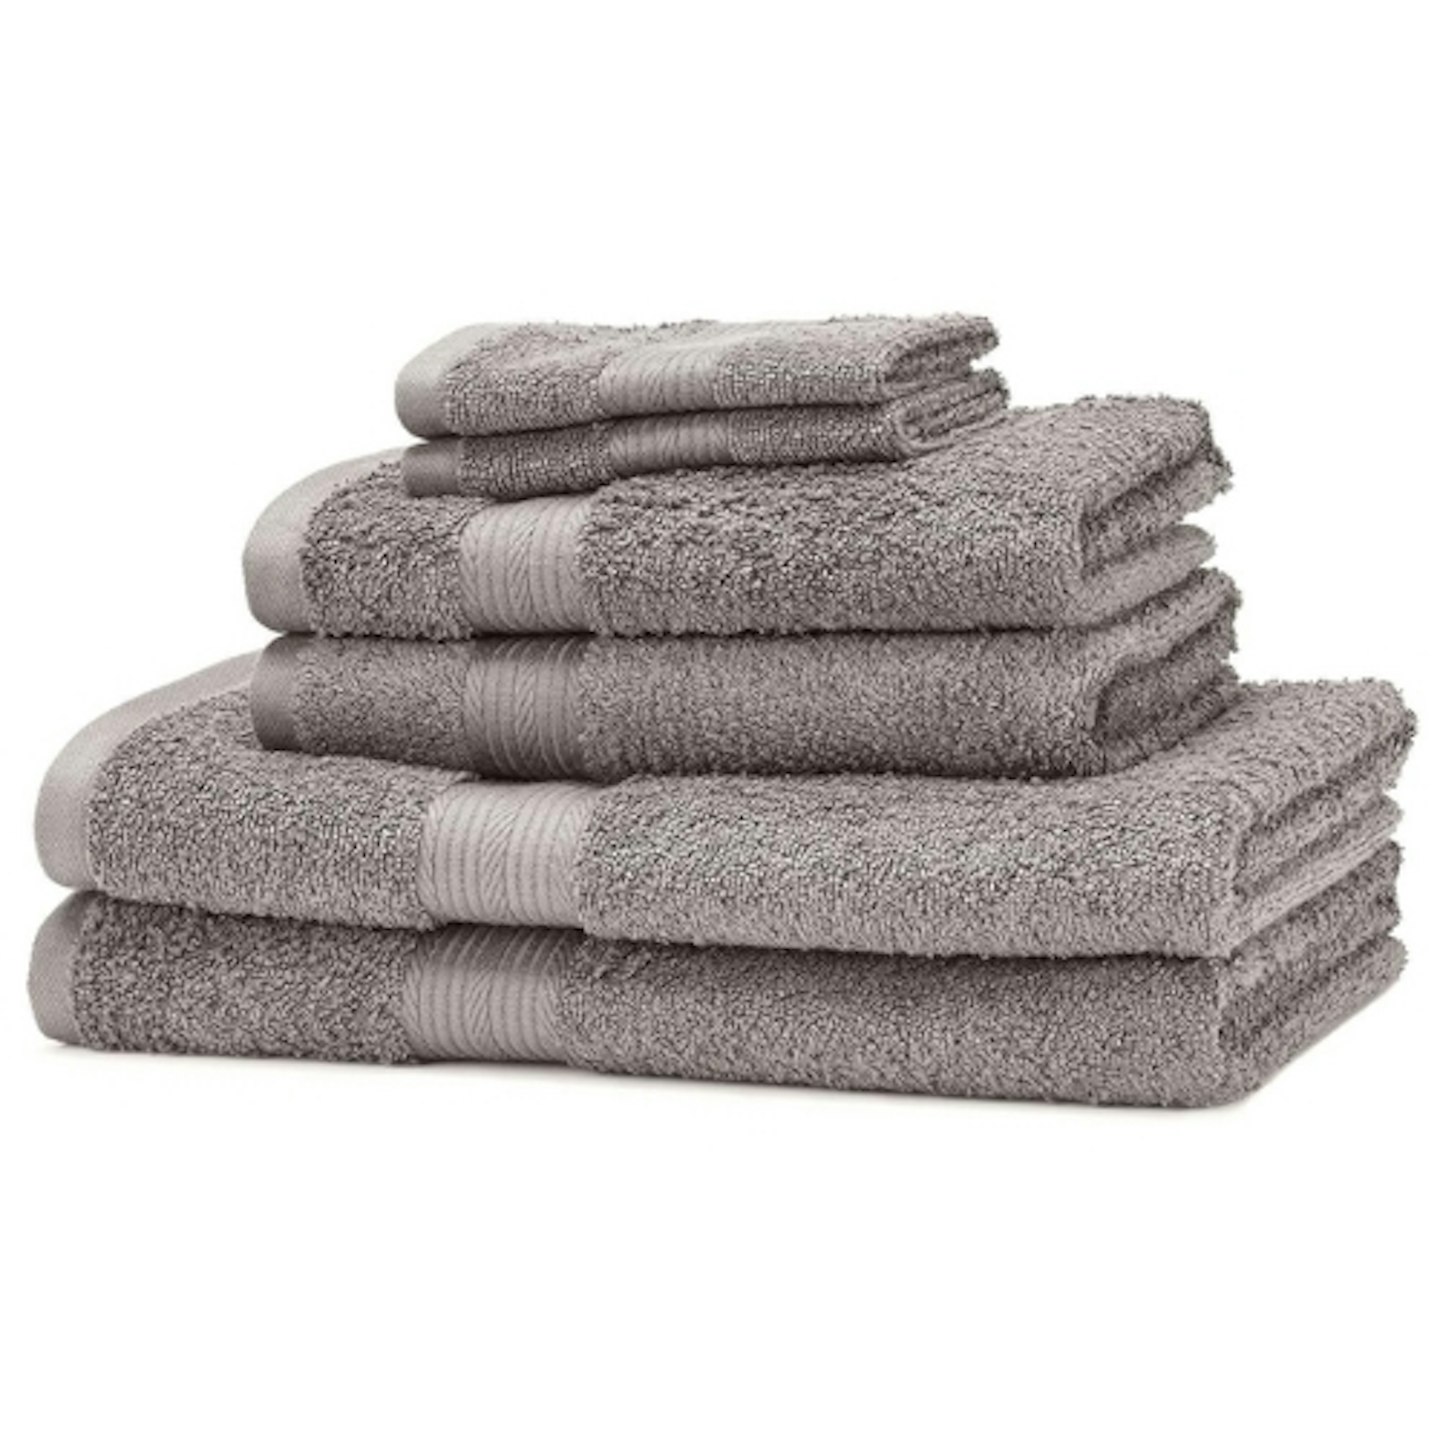 Amazon Basics 6 Piece Fade Resistant Bath Towel Set